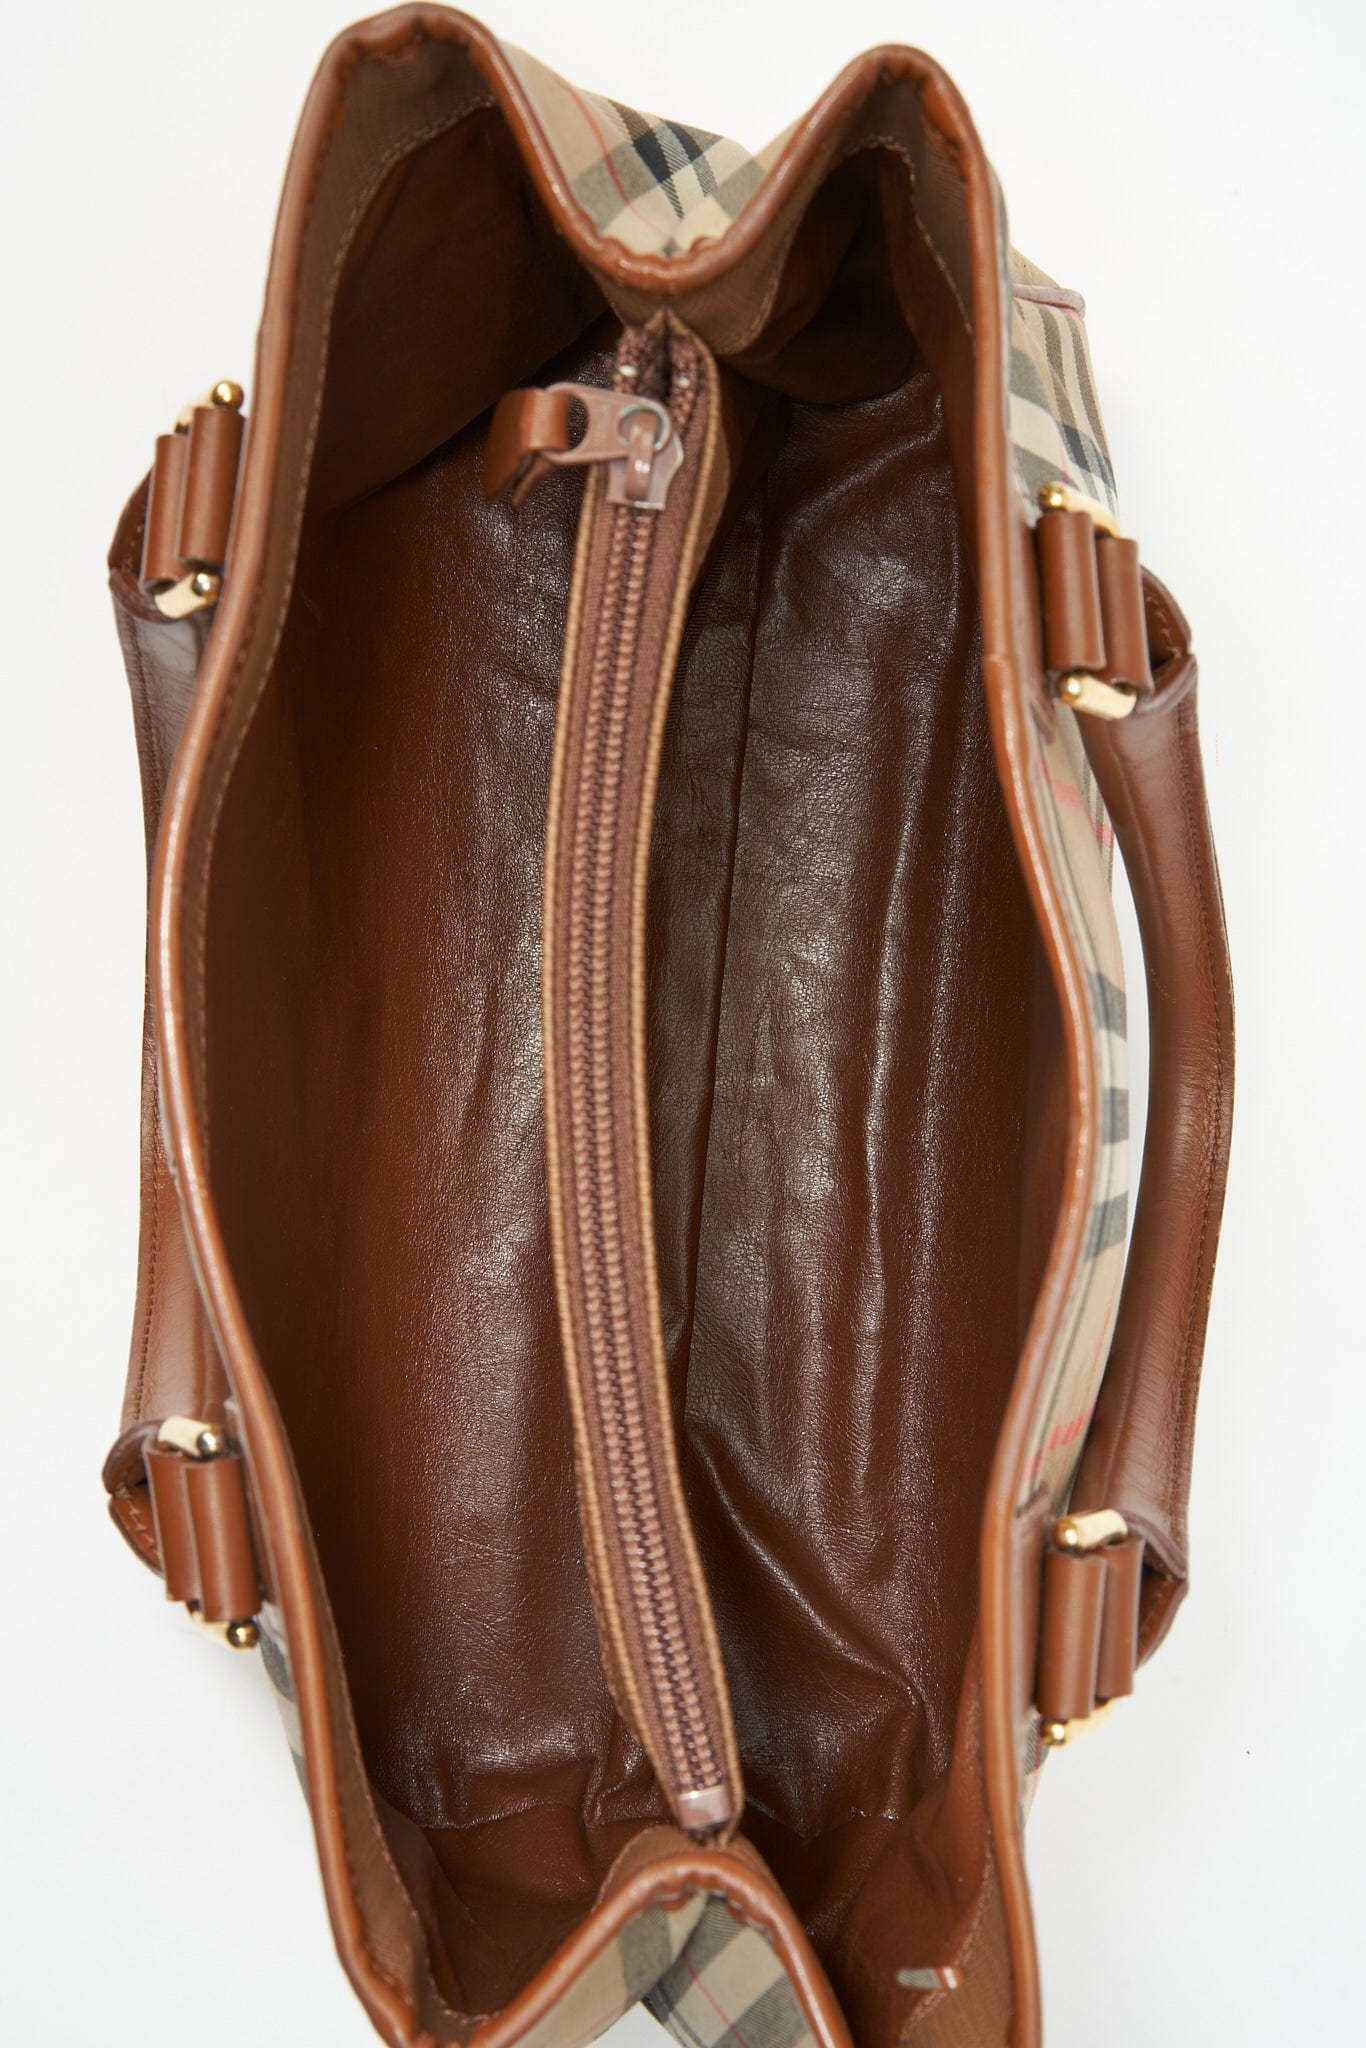 Vintage Burberry Bag ORIGINAL Burberrys of London, Luxury, Bags